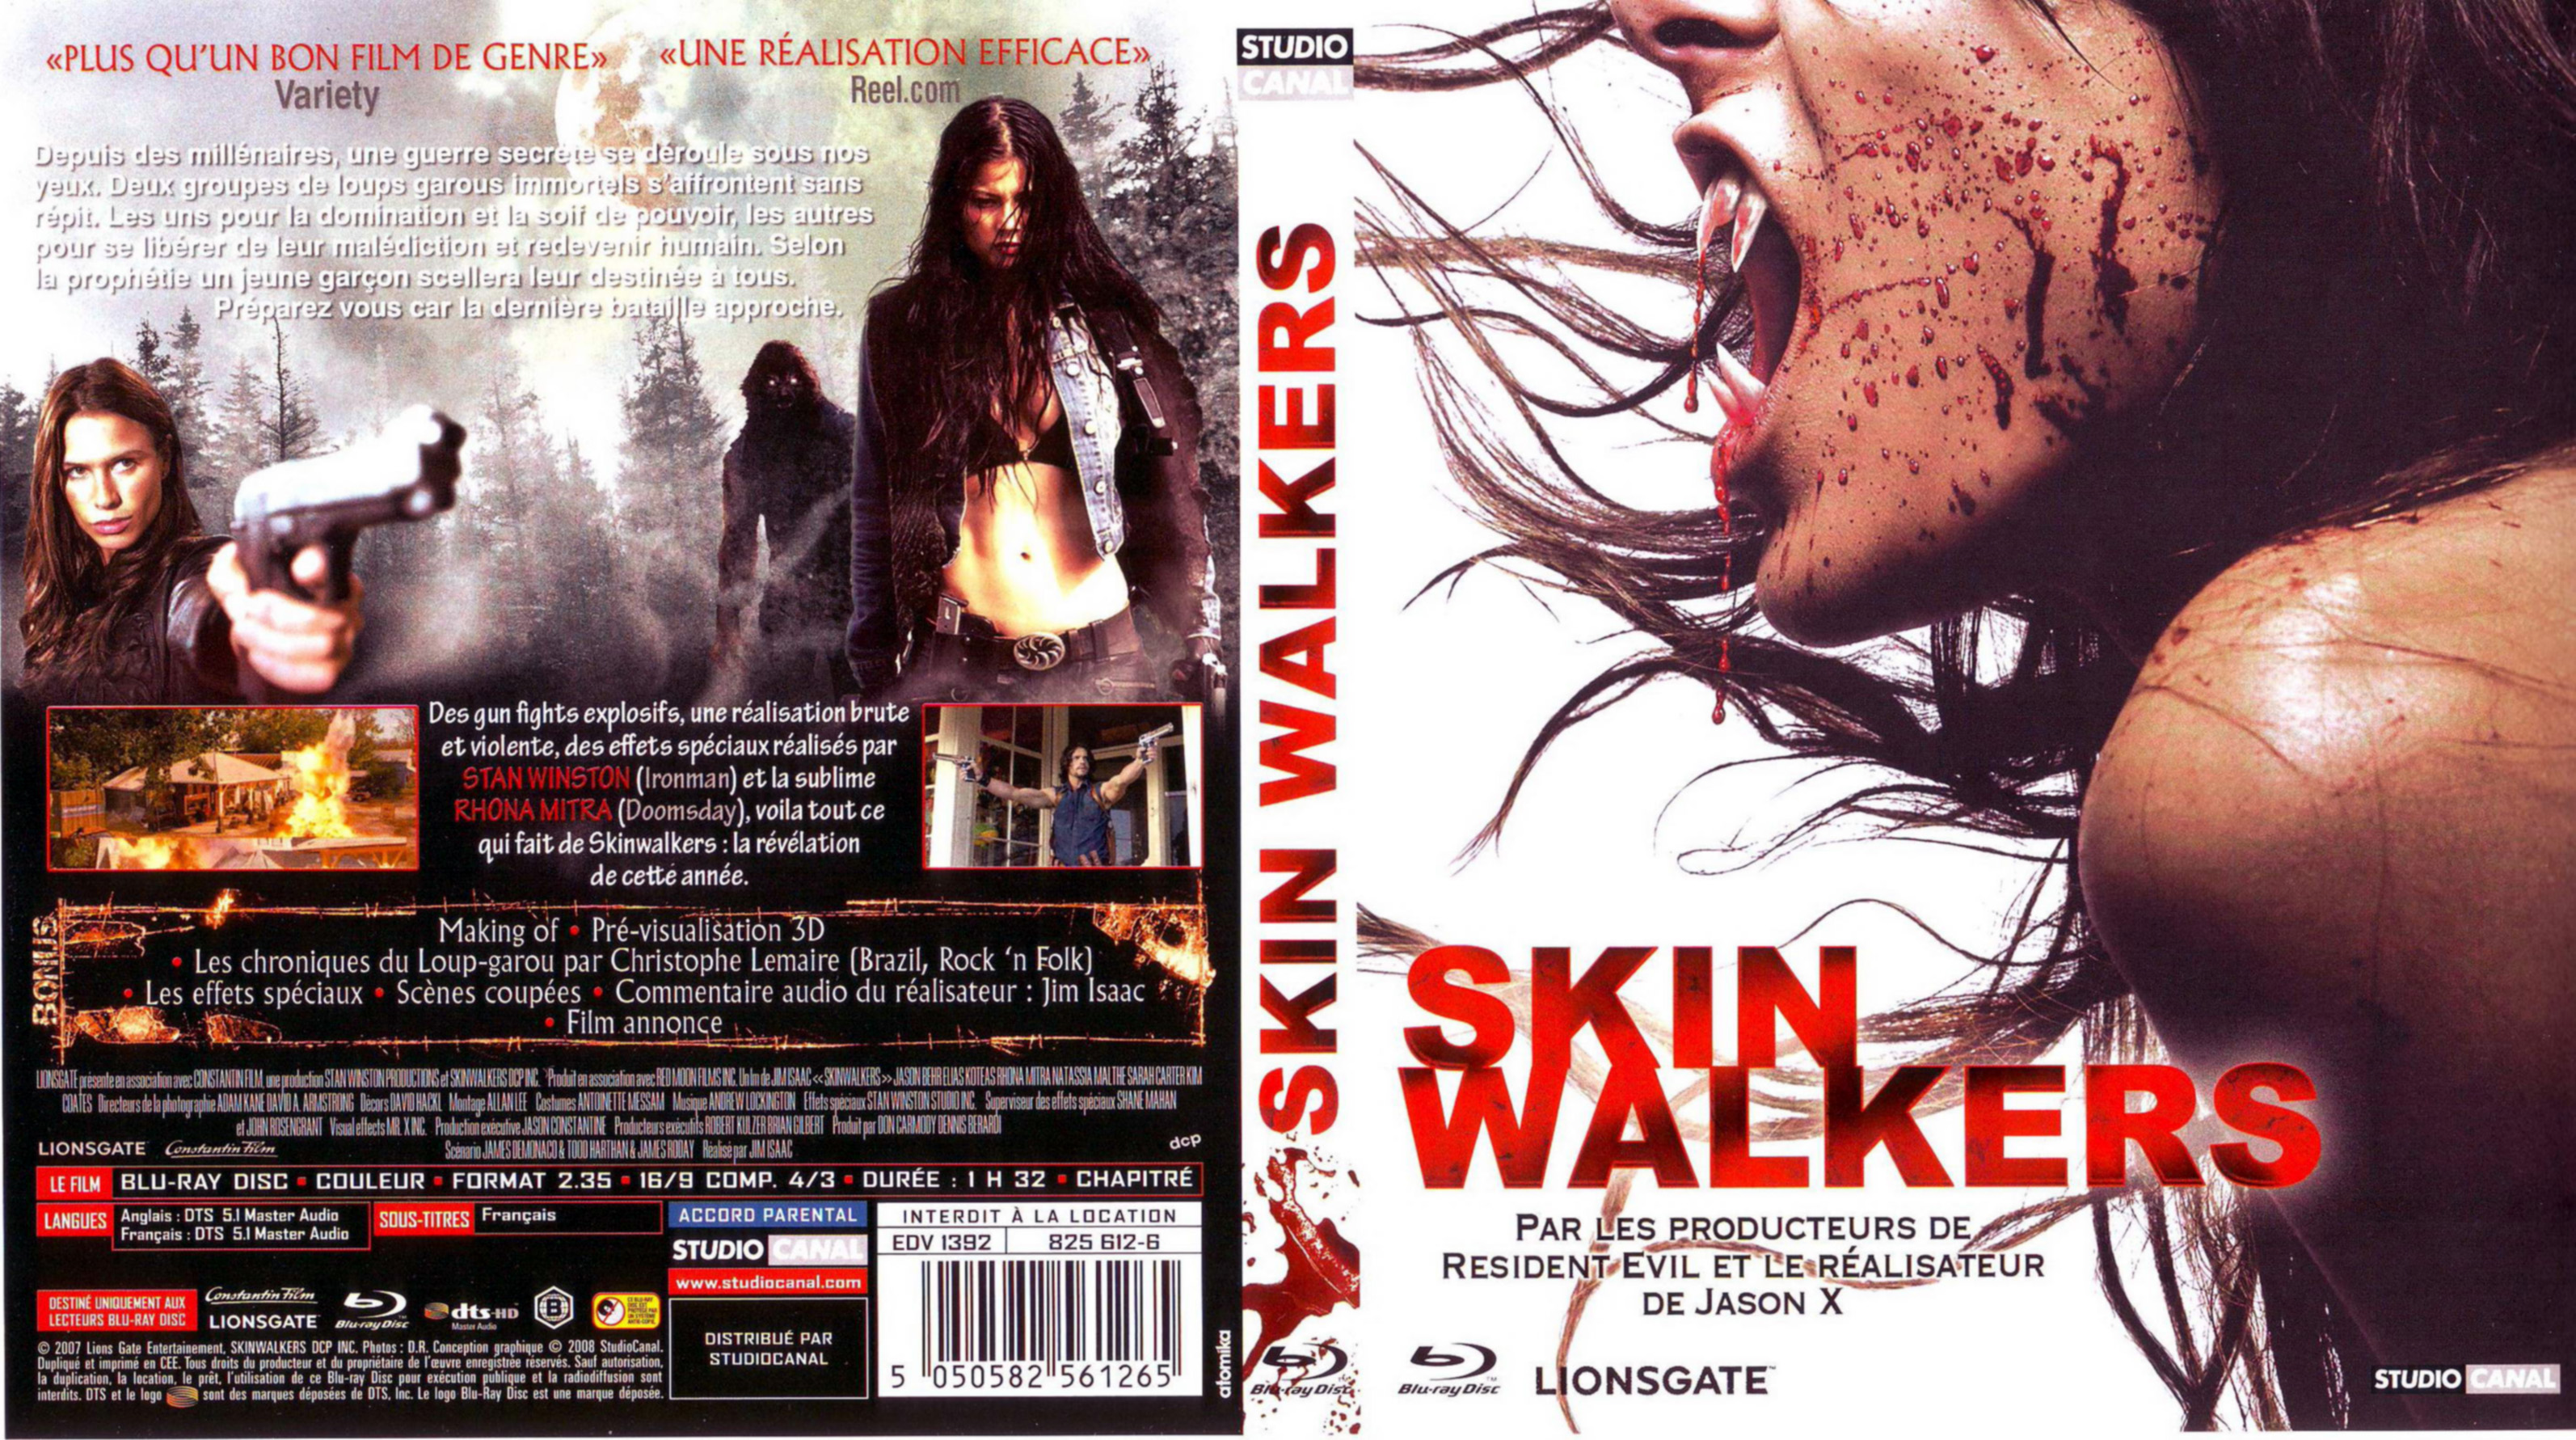 Jaquette DVD Skin walkers (BLU-RAY)